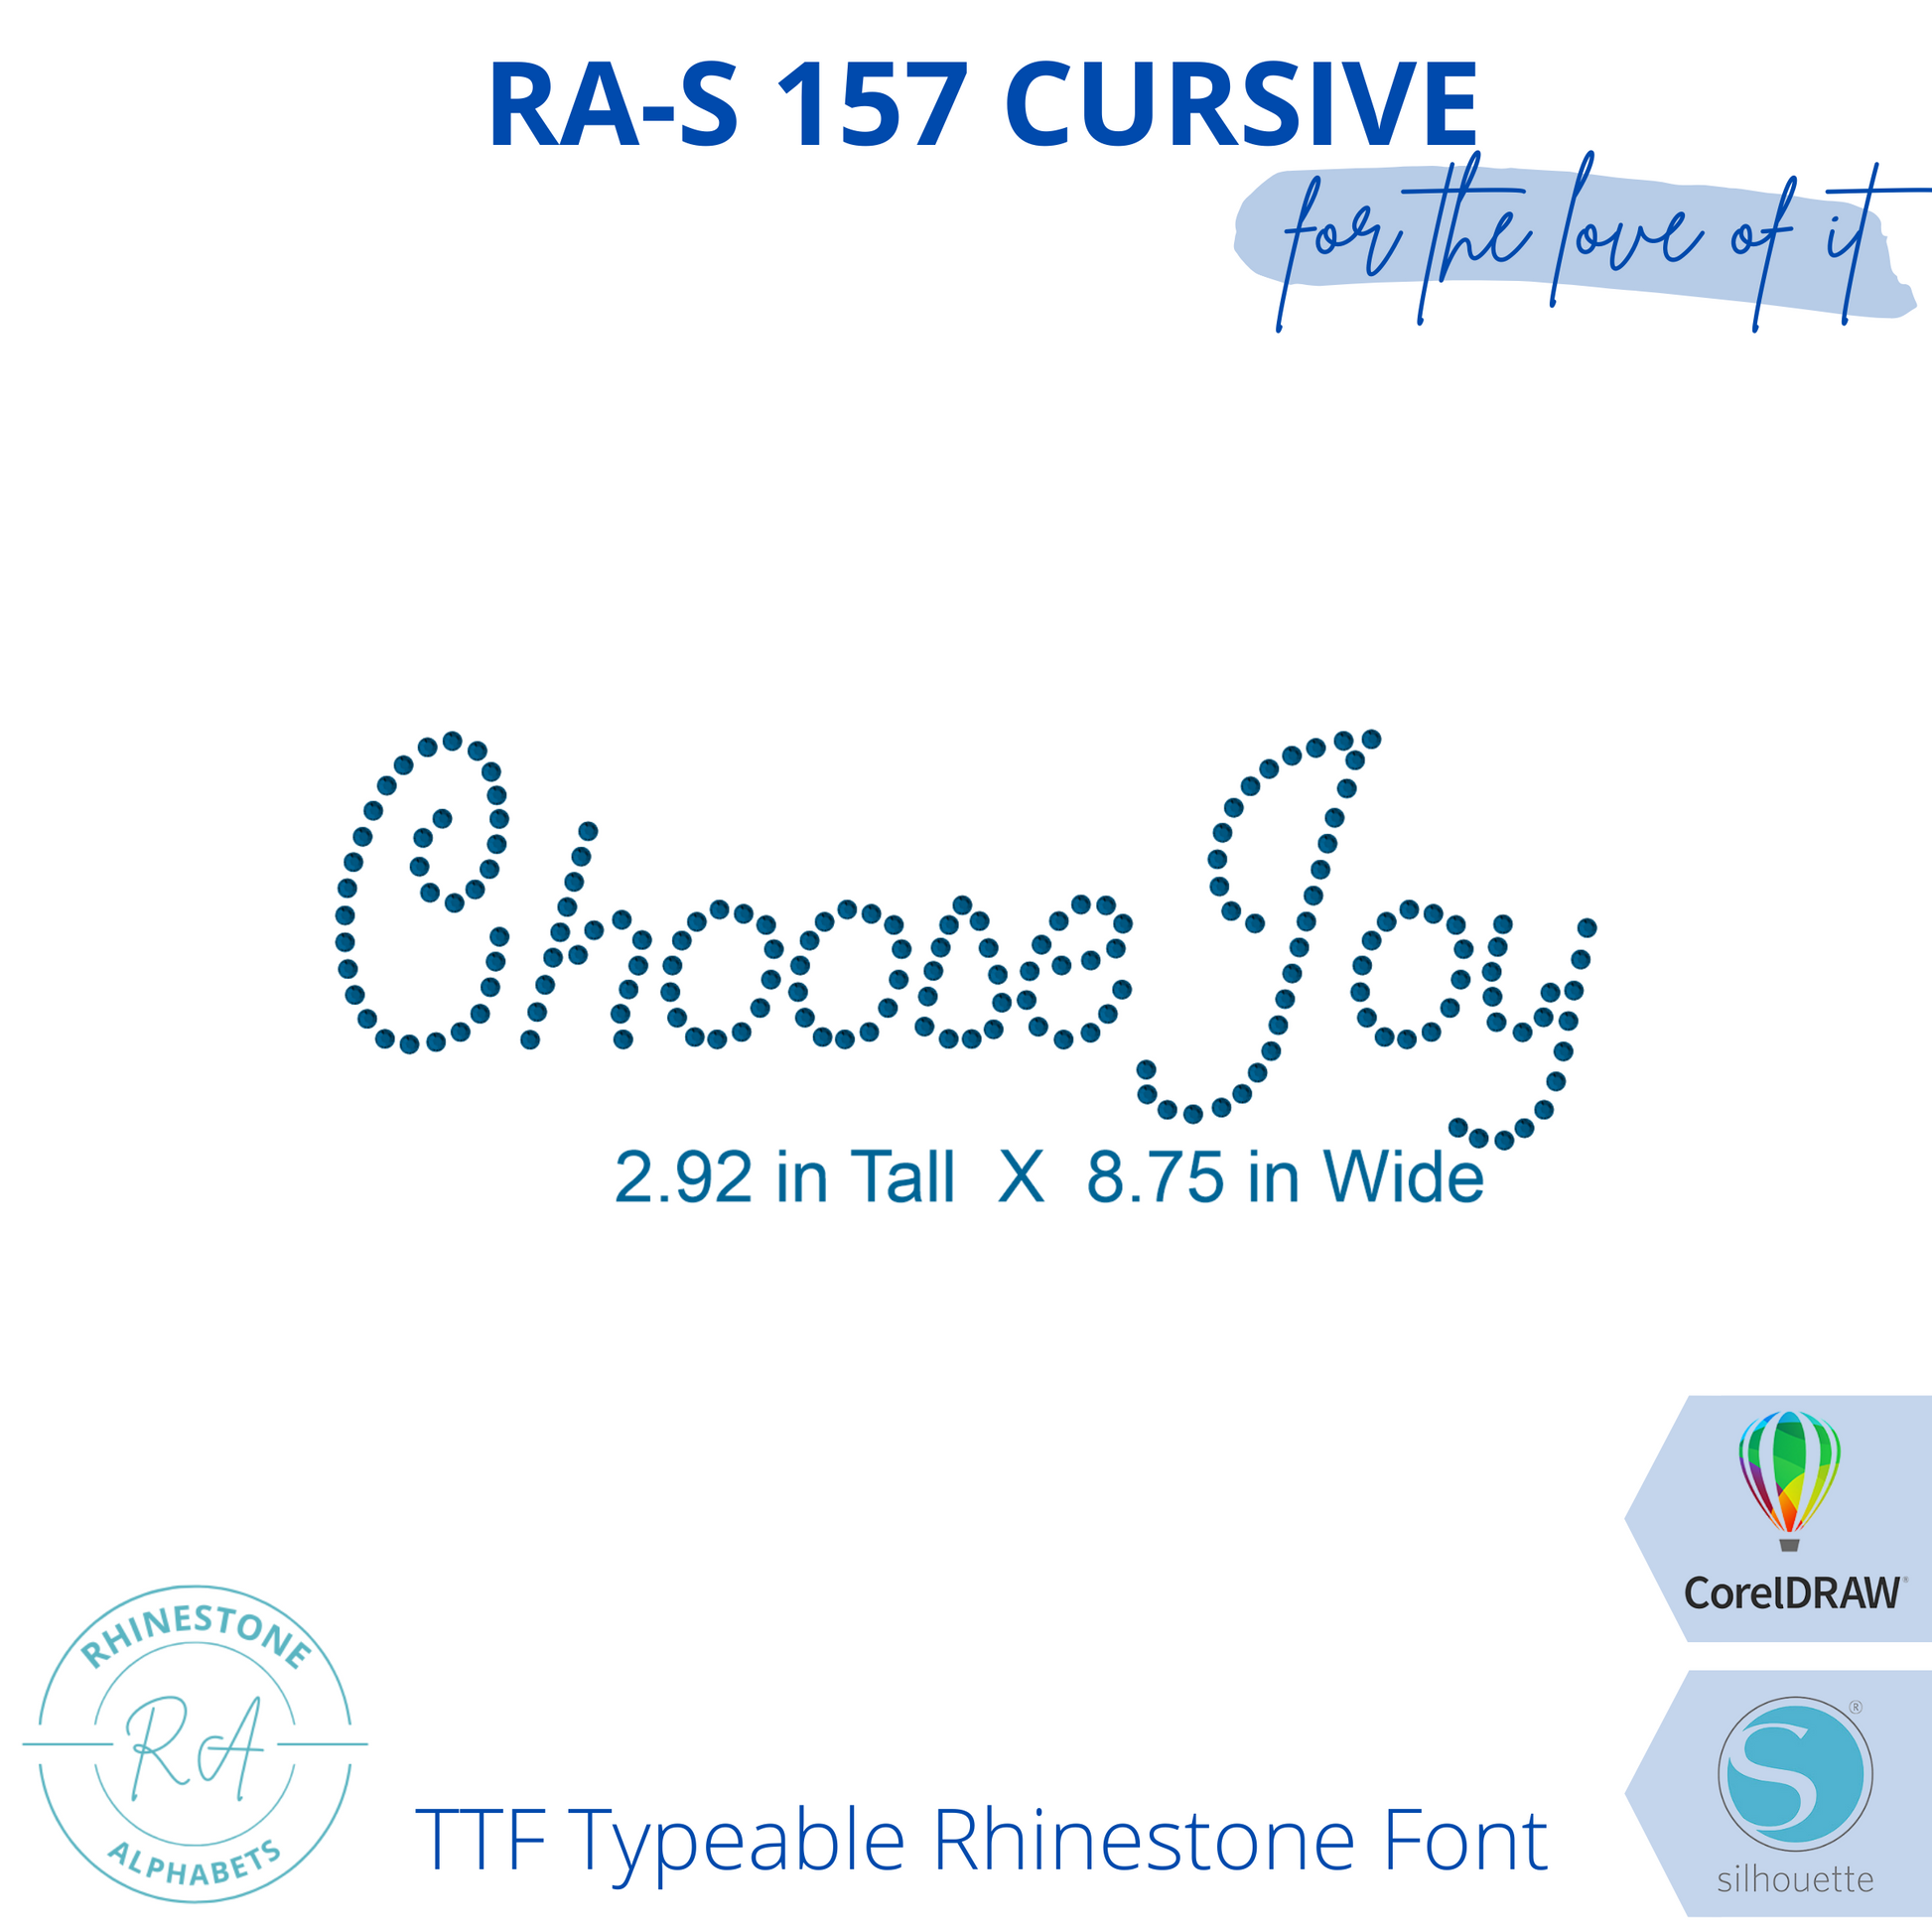 RA-S 157 Cursive - RhinestoneAlphabets